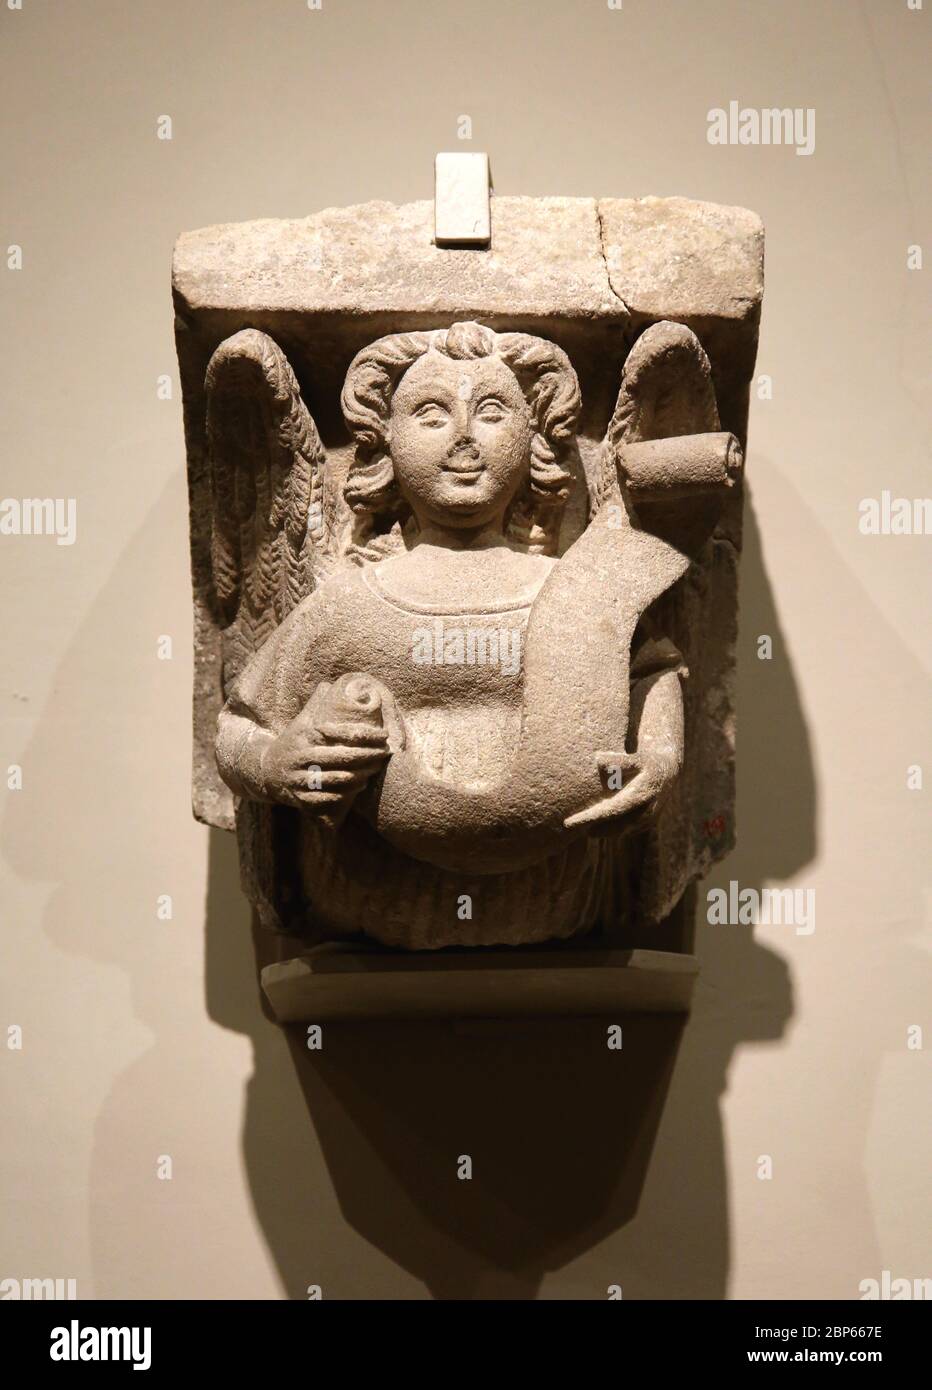 Pietra di Corbel scolpita con angelo 15 ° secolo. Jordi de Deu ( c.. 1363-1418) o in officina. Museo di arte gotica catalana Frederic Mares, Barcellona. Foto Stock